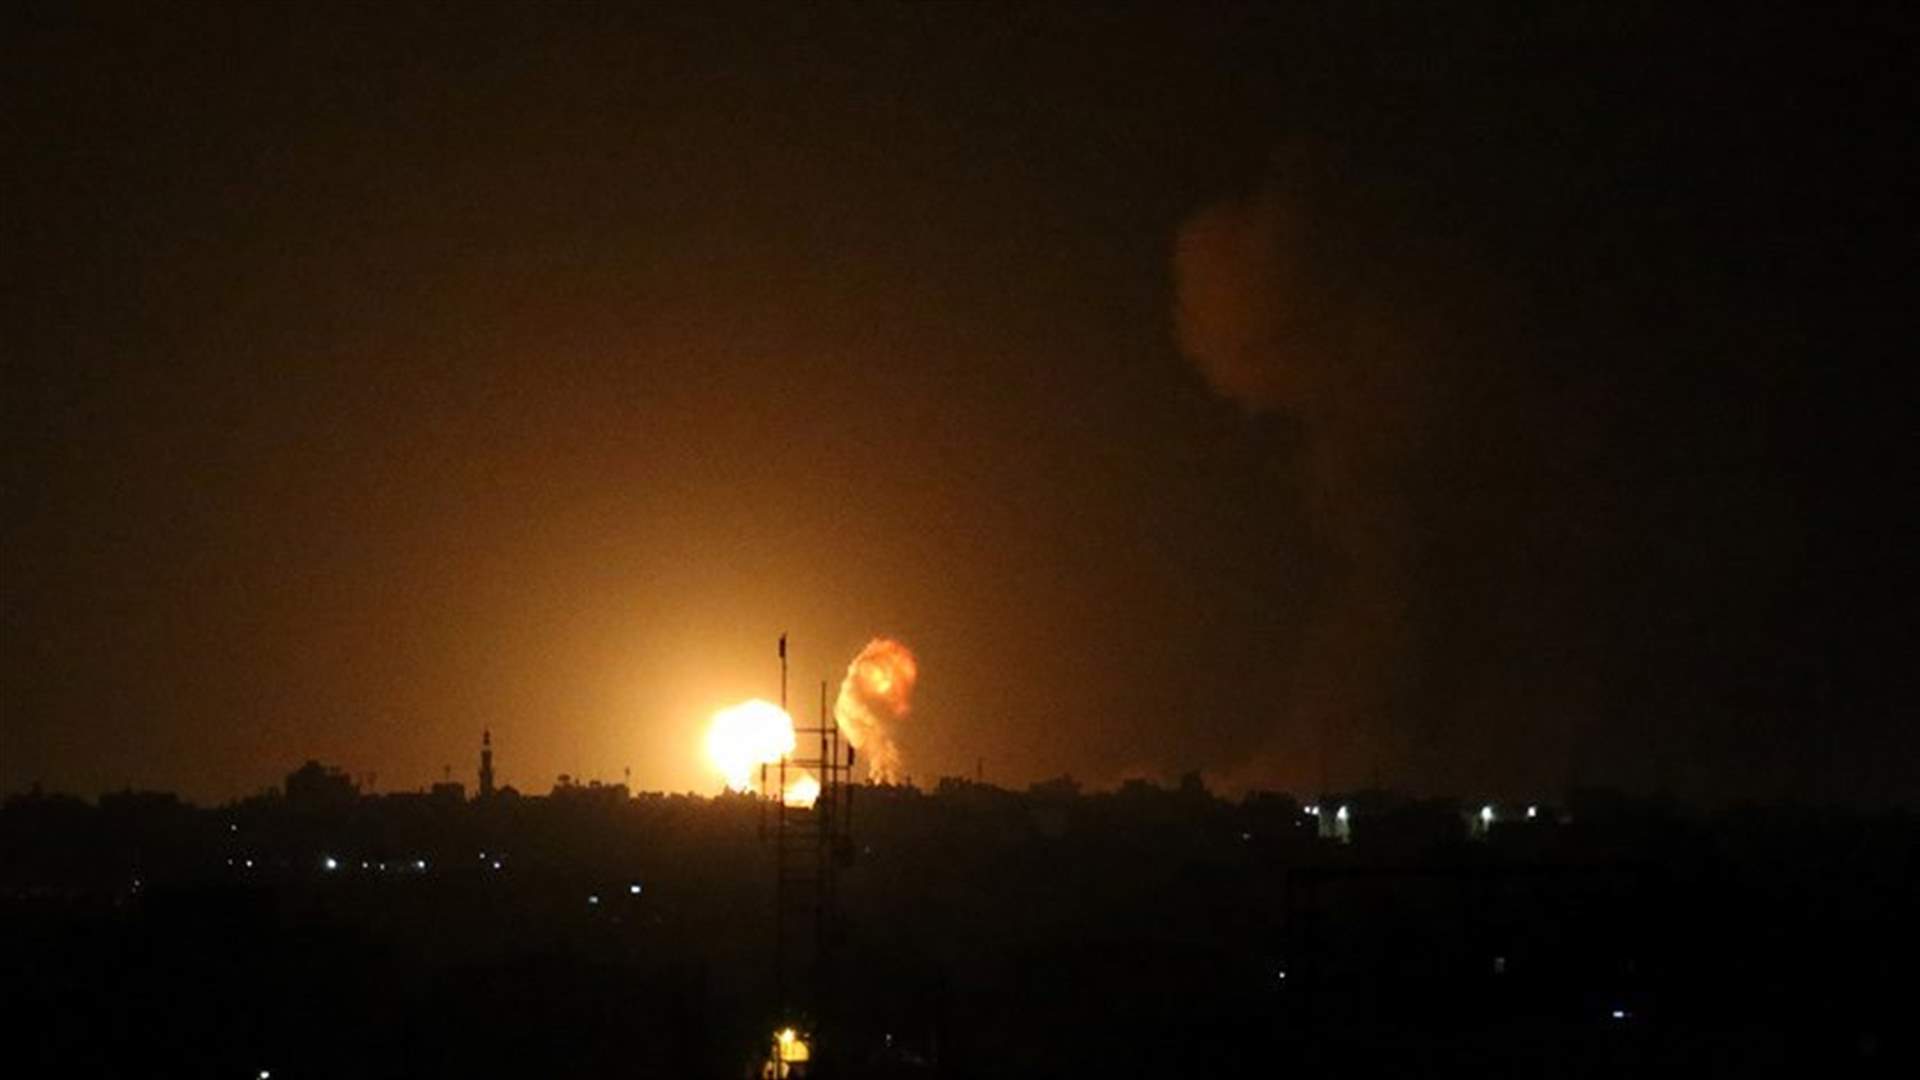 Israel, Hamas agree to restore calm in Gaza - Hamas